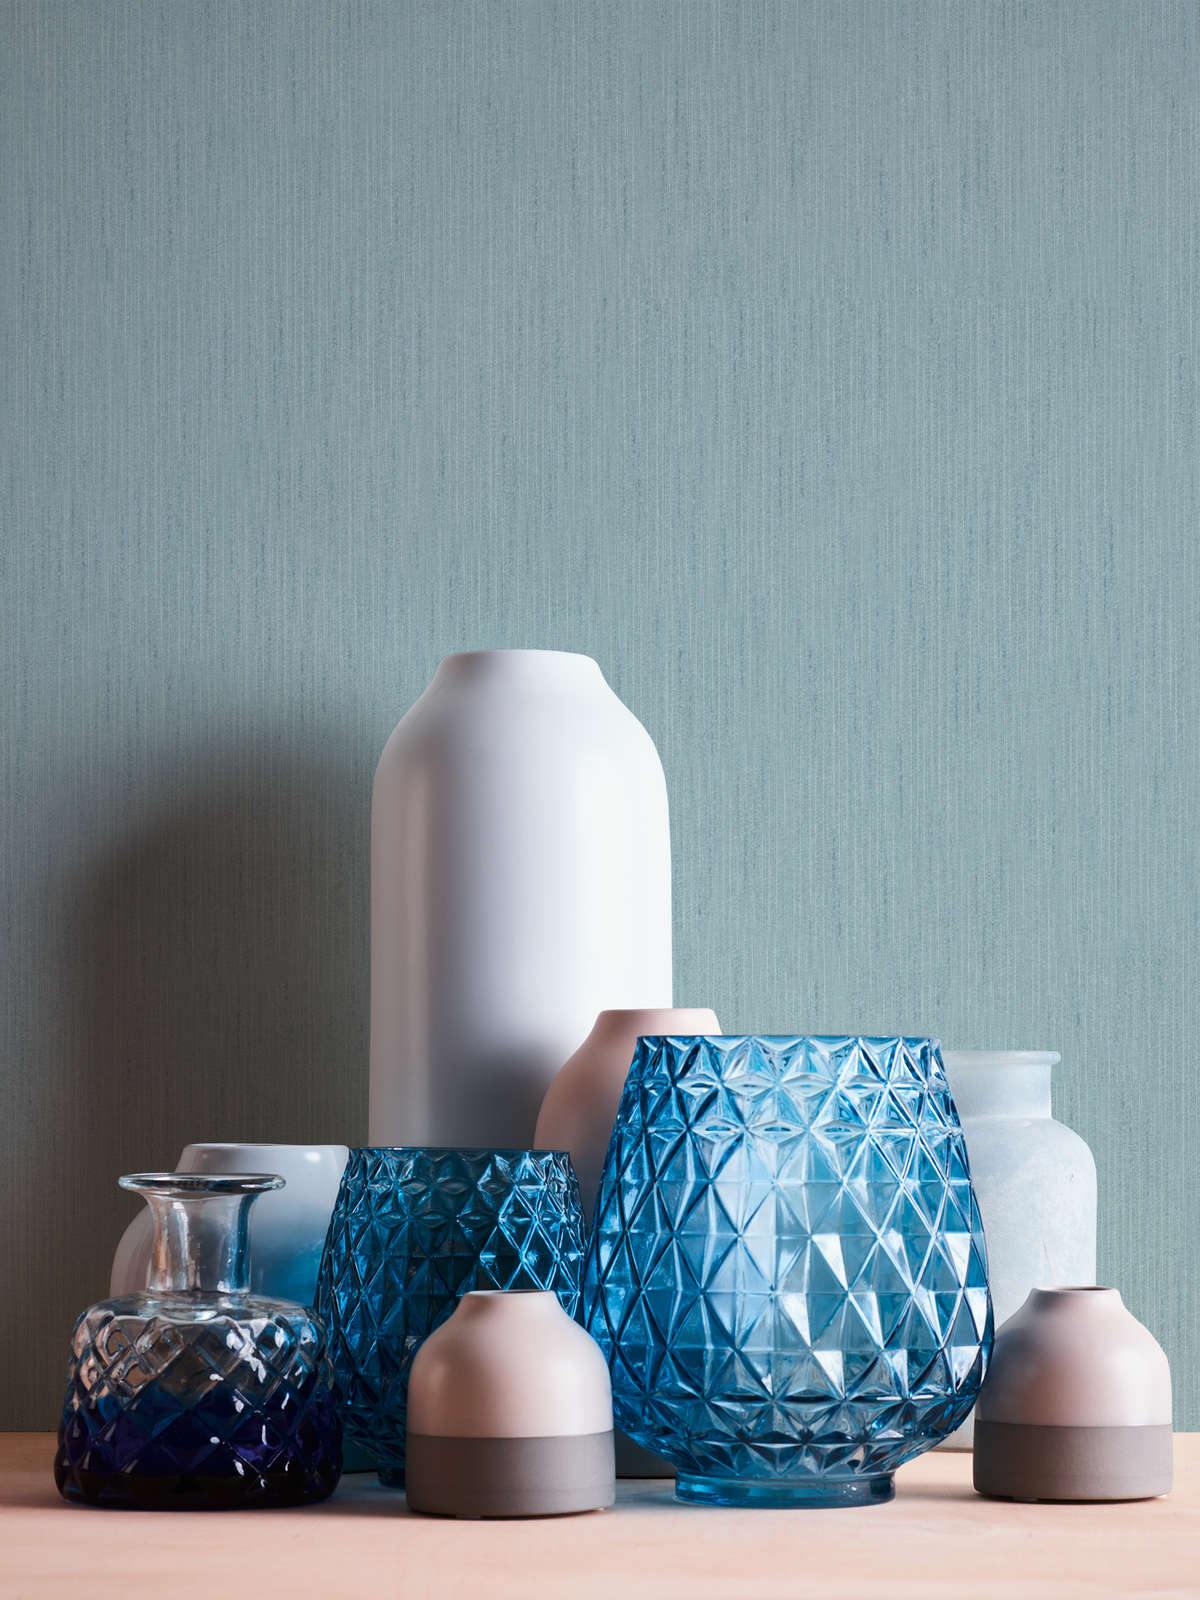             Tapete Blau Grau mit Struktureffekt & melierter Farbe & Textileffekt
        